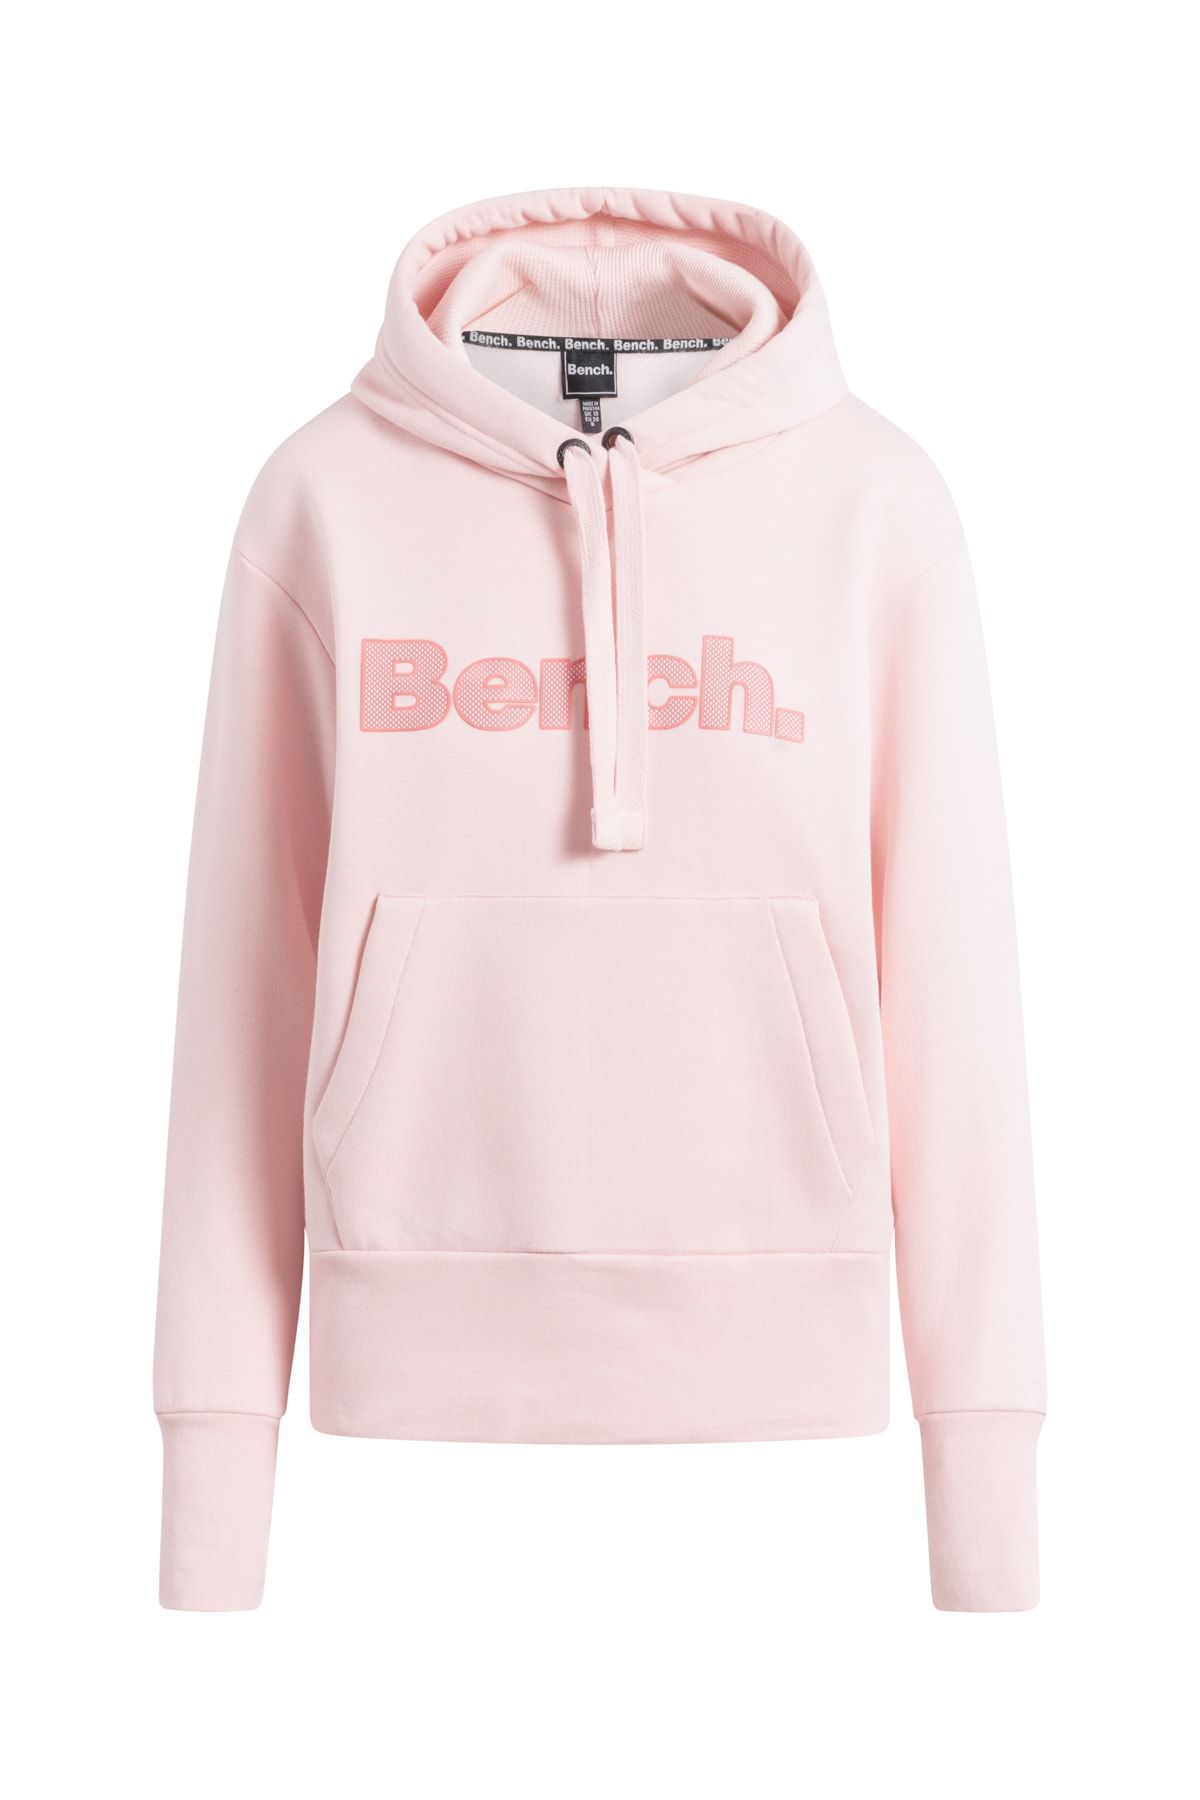 BENCH Sweatshirt - Rosa - Regular Fit - Trendyol | Sweatshirts